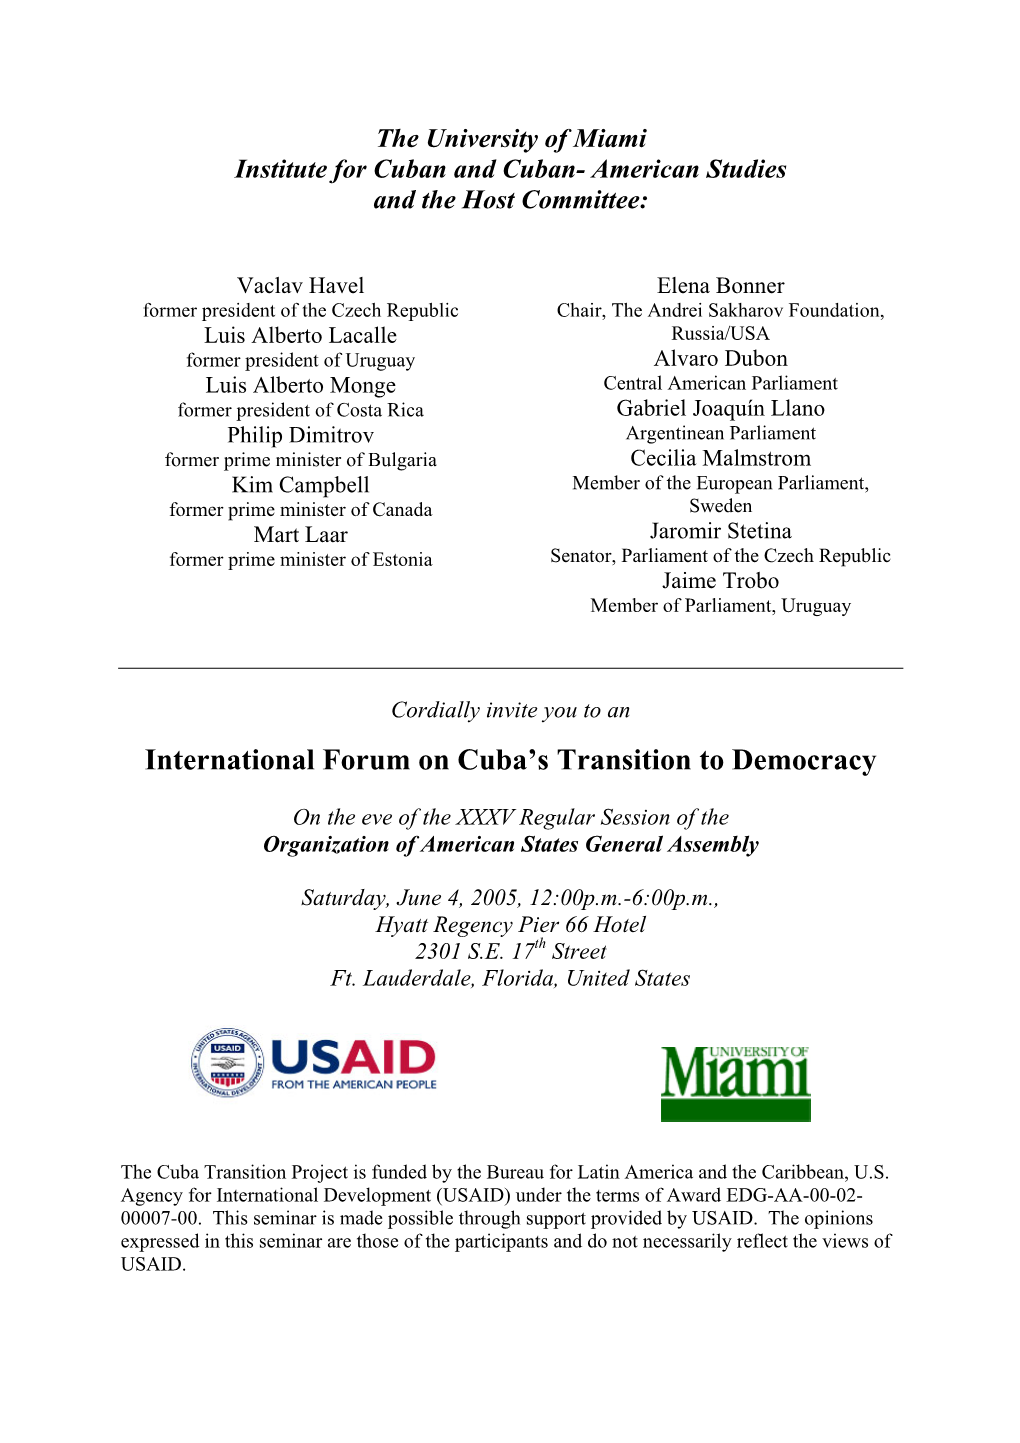 International Forum on Cuba's Transition to Democracy